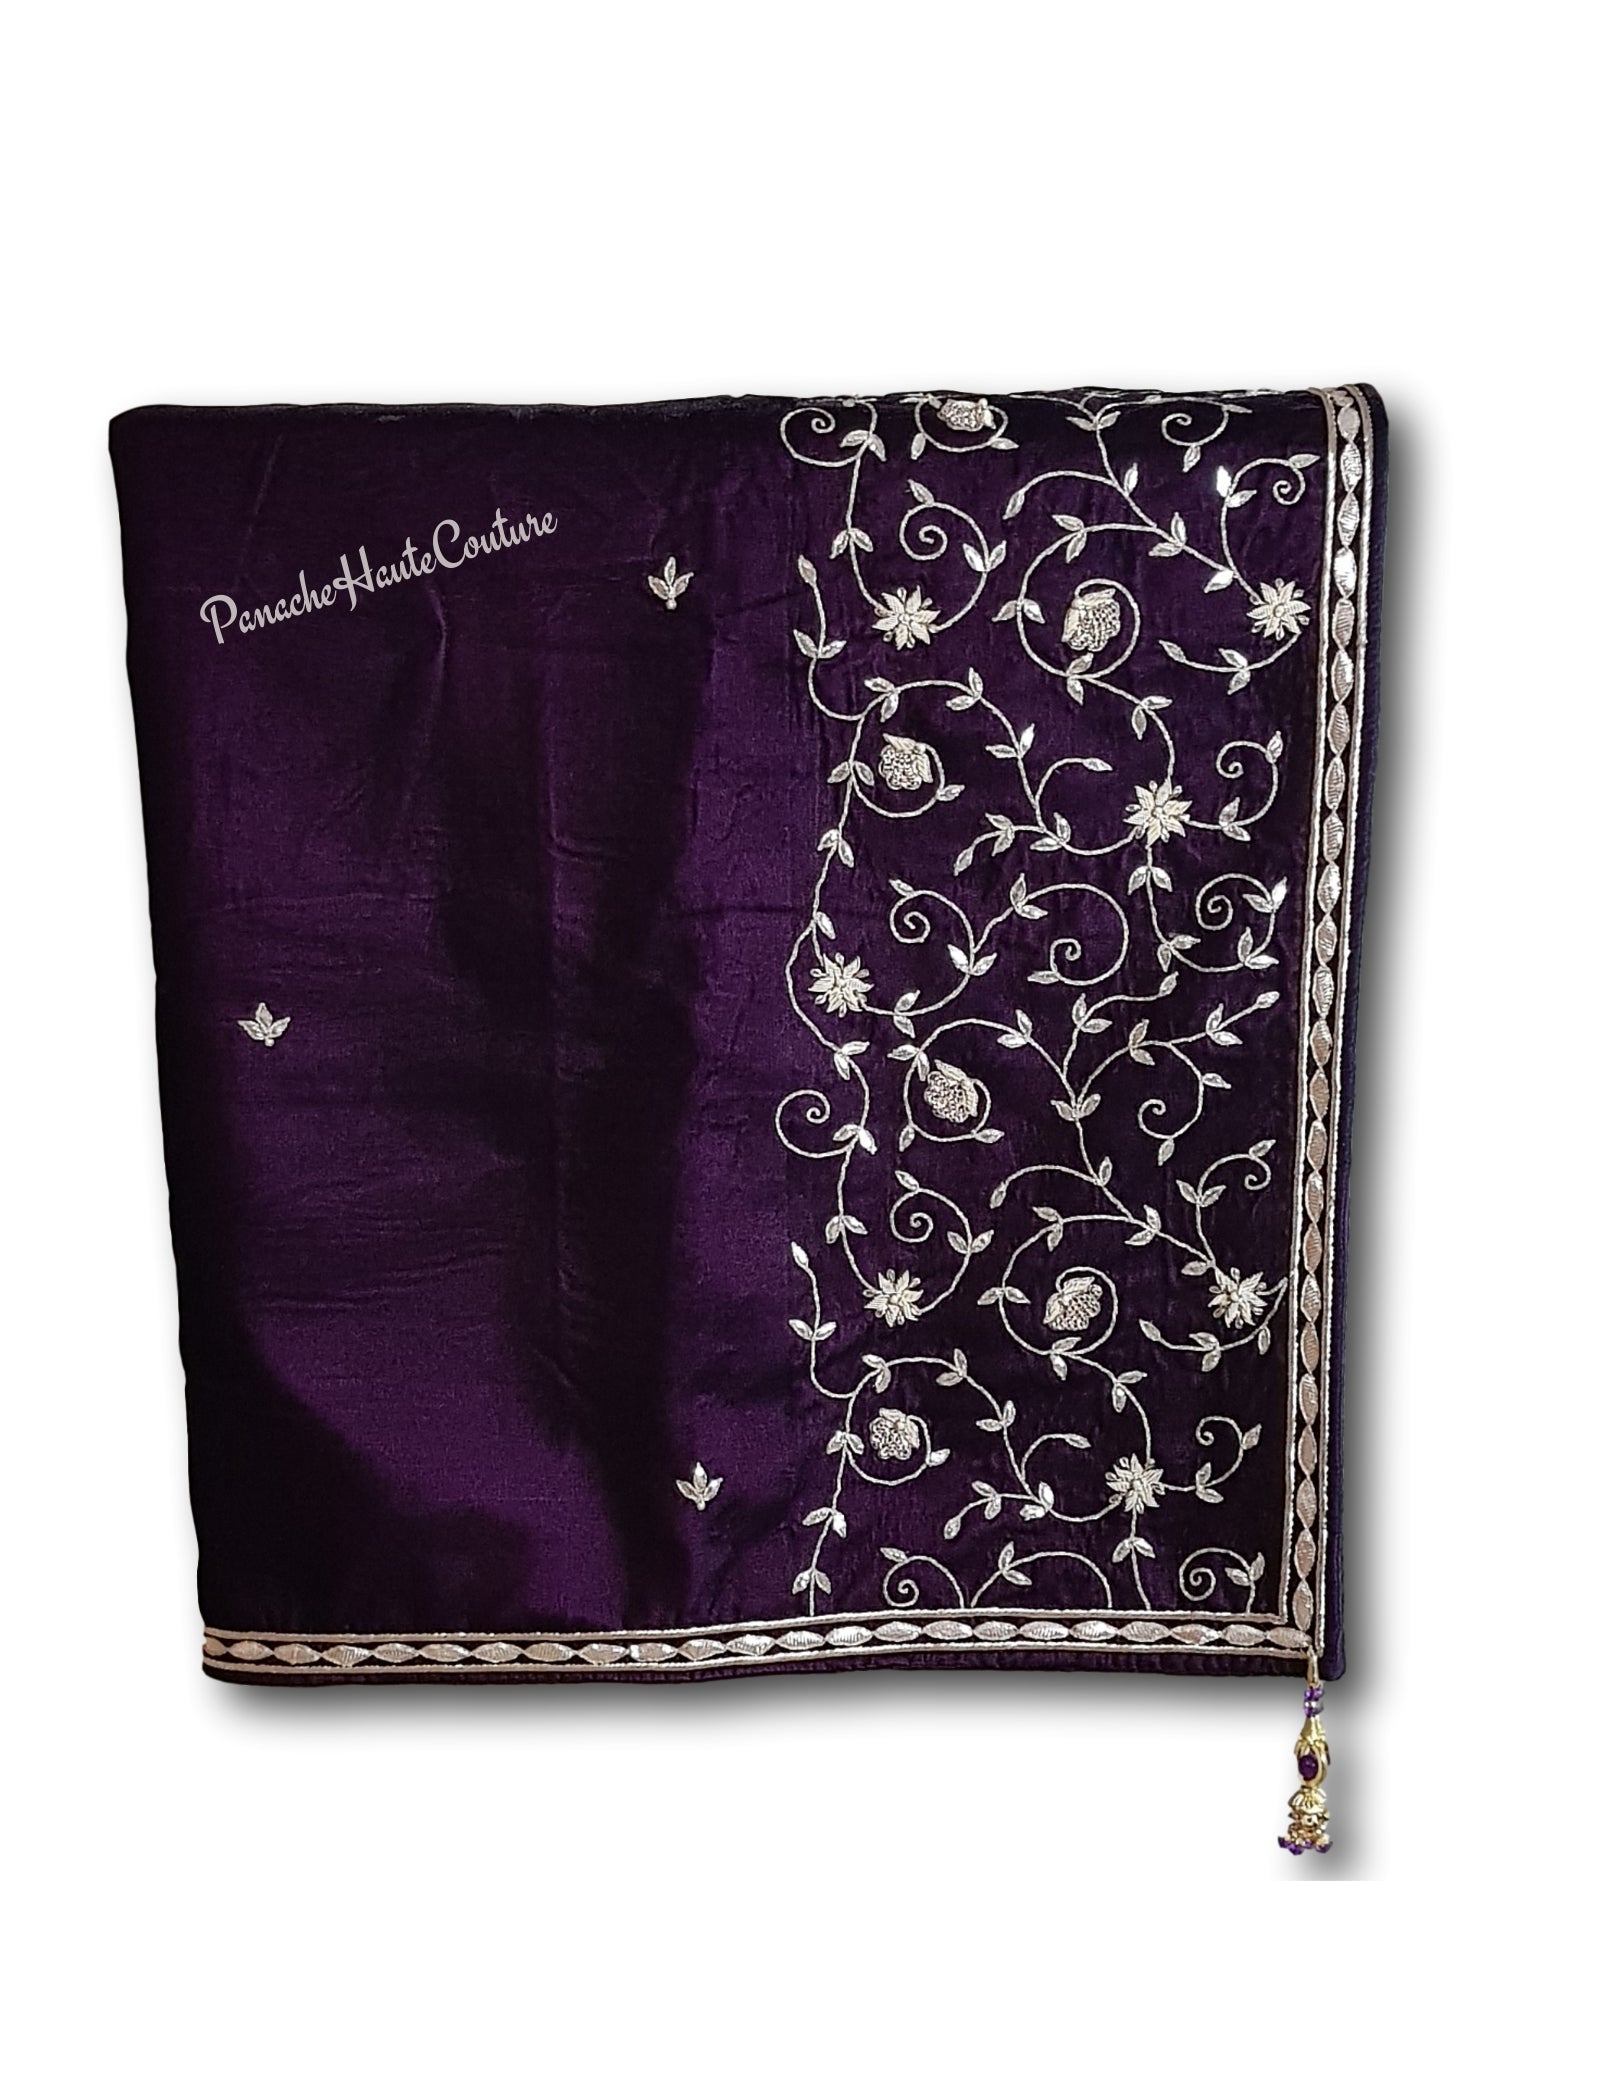 Purple colour velvet shawl / Dupatta